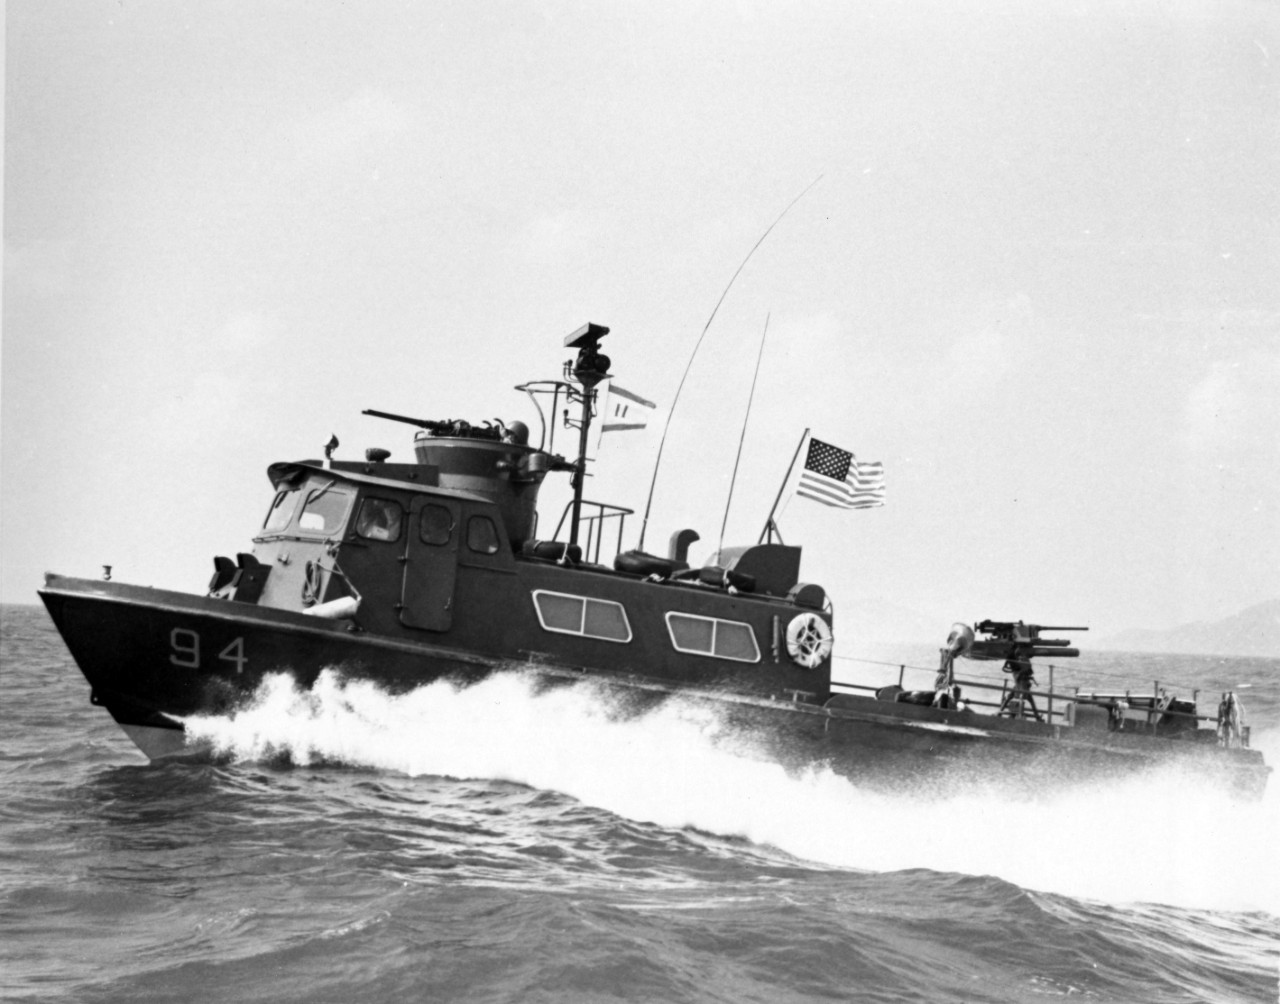 PCF-94 Fast Coastal Patrol Boat in Vietnam